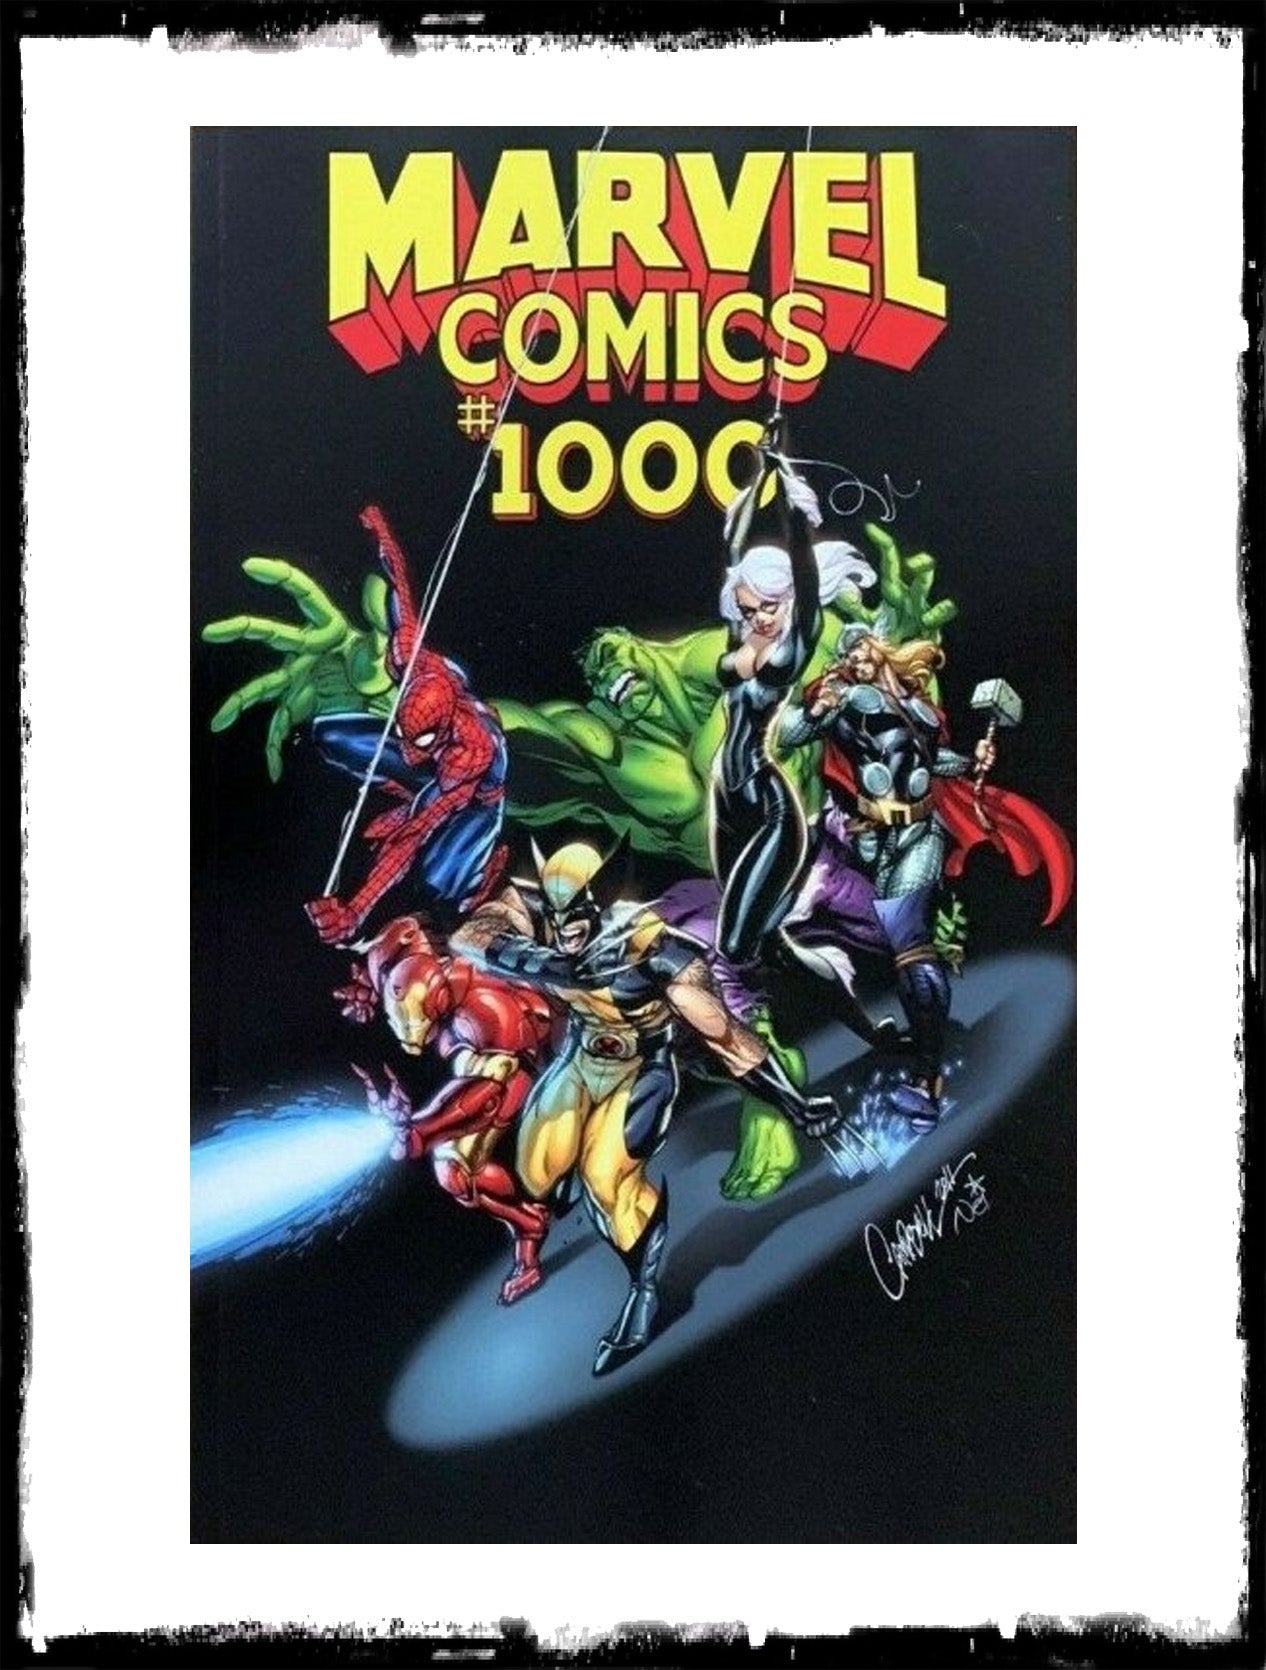 MARVEL COMICS #1000 - J. SCOTT CAMPBELL VARIANT (2019 - NM)